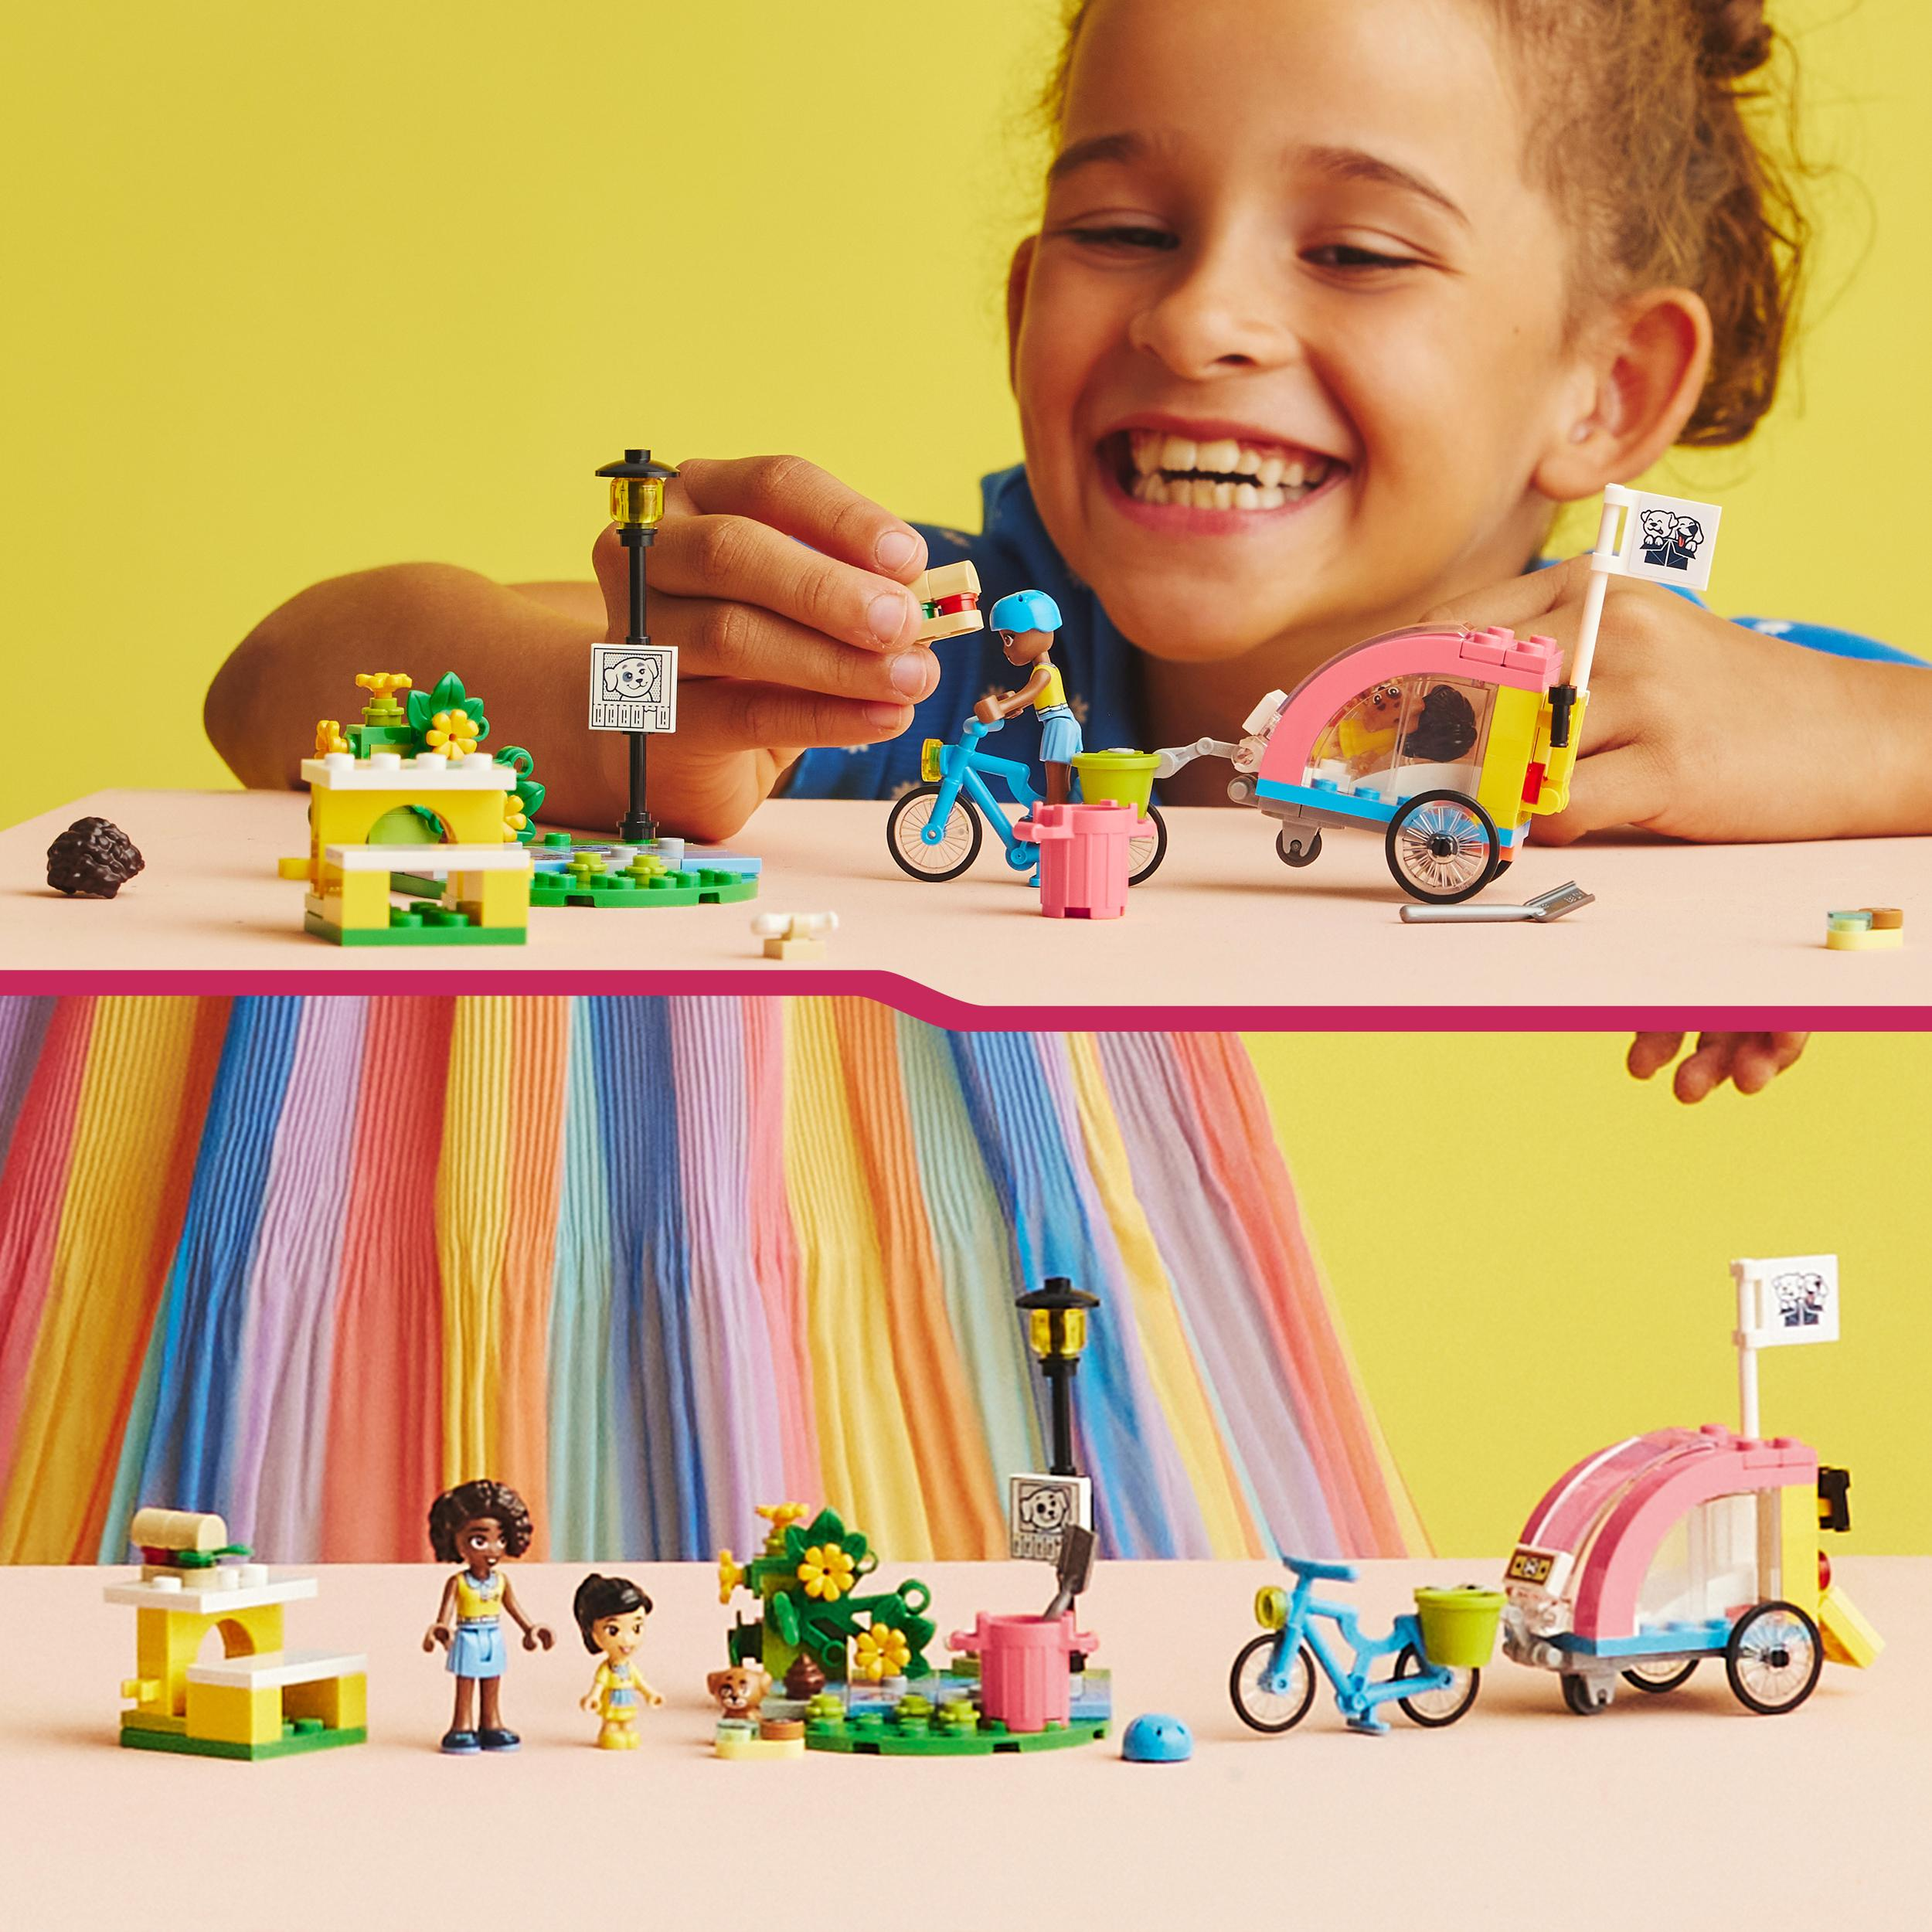 LEGO Friends Bausatz, 41738 Hunderettungsfahrrad Mehrfarbig